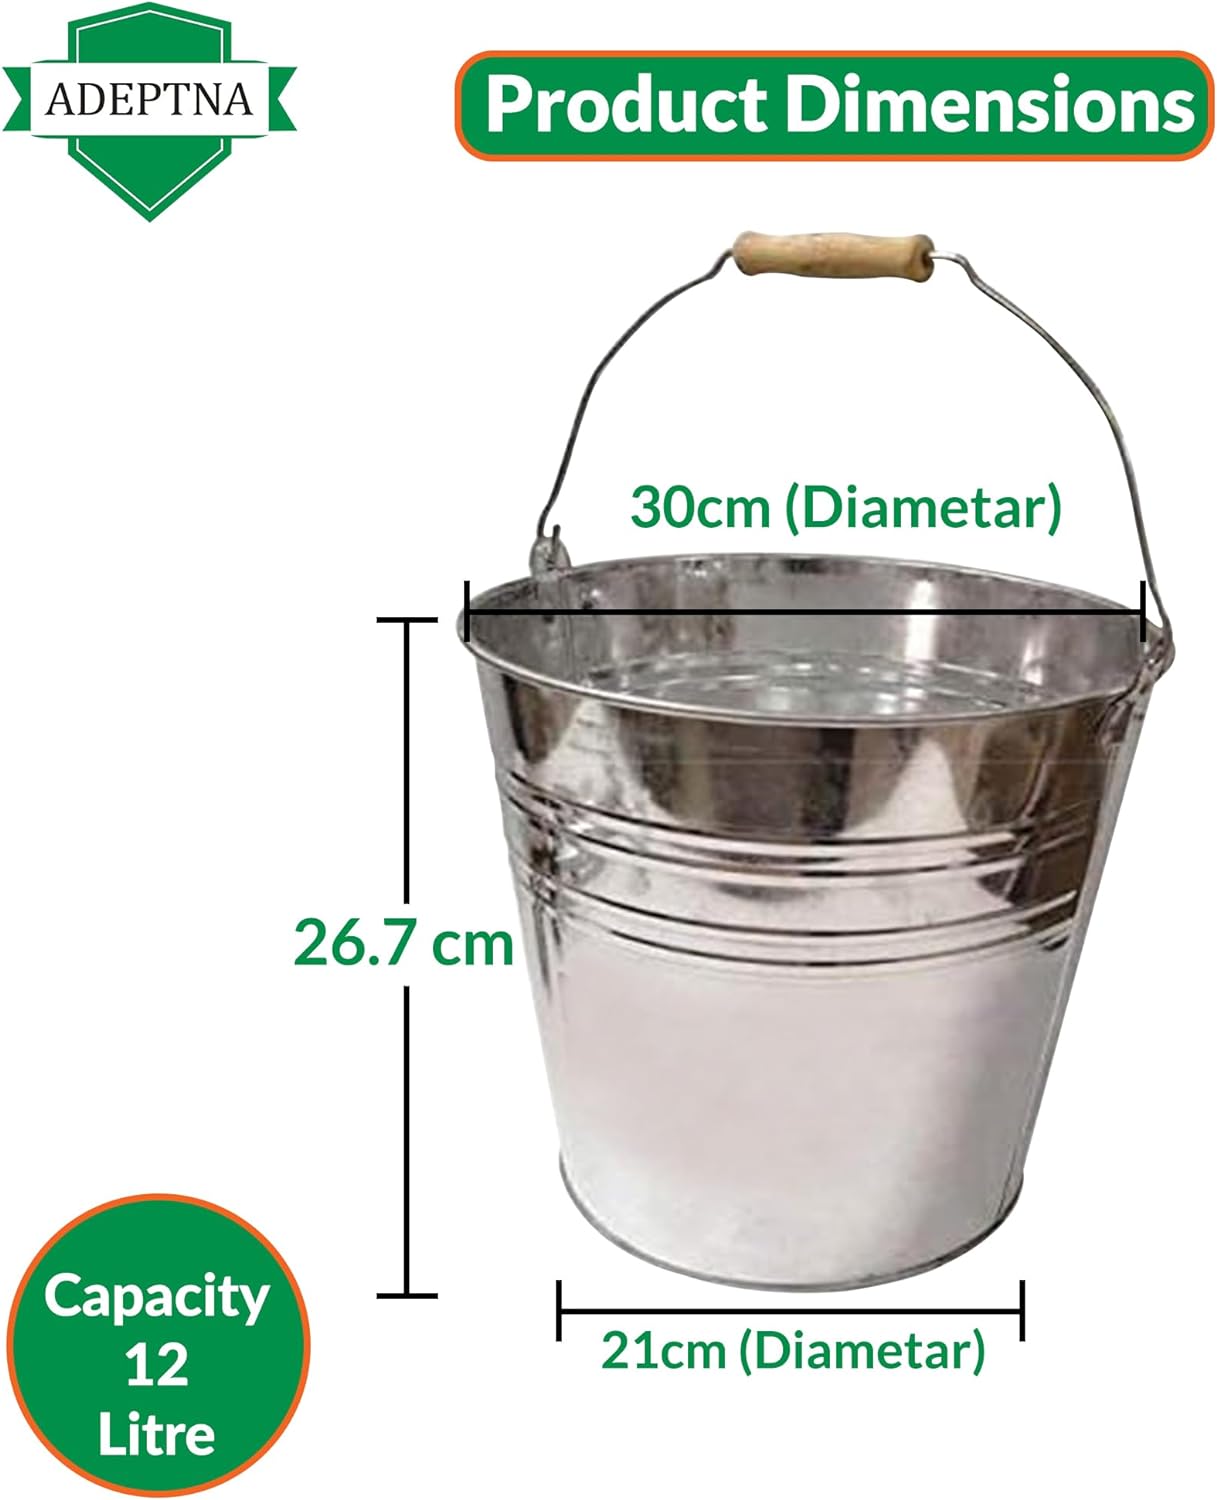 ADEPTNA Robust Galvanized Steel Bucket with Wooden Handle for Cleaning Garden Storage Hot Ash Coal Bucket Garden Waste Drink Cooler Bucket for Multipurpose (12 Liter)